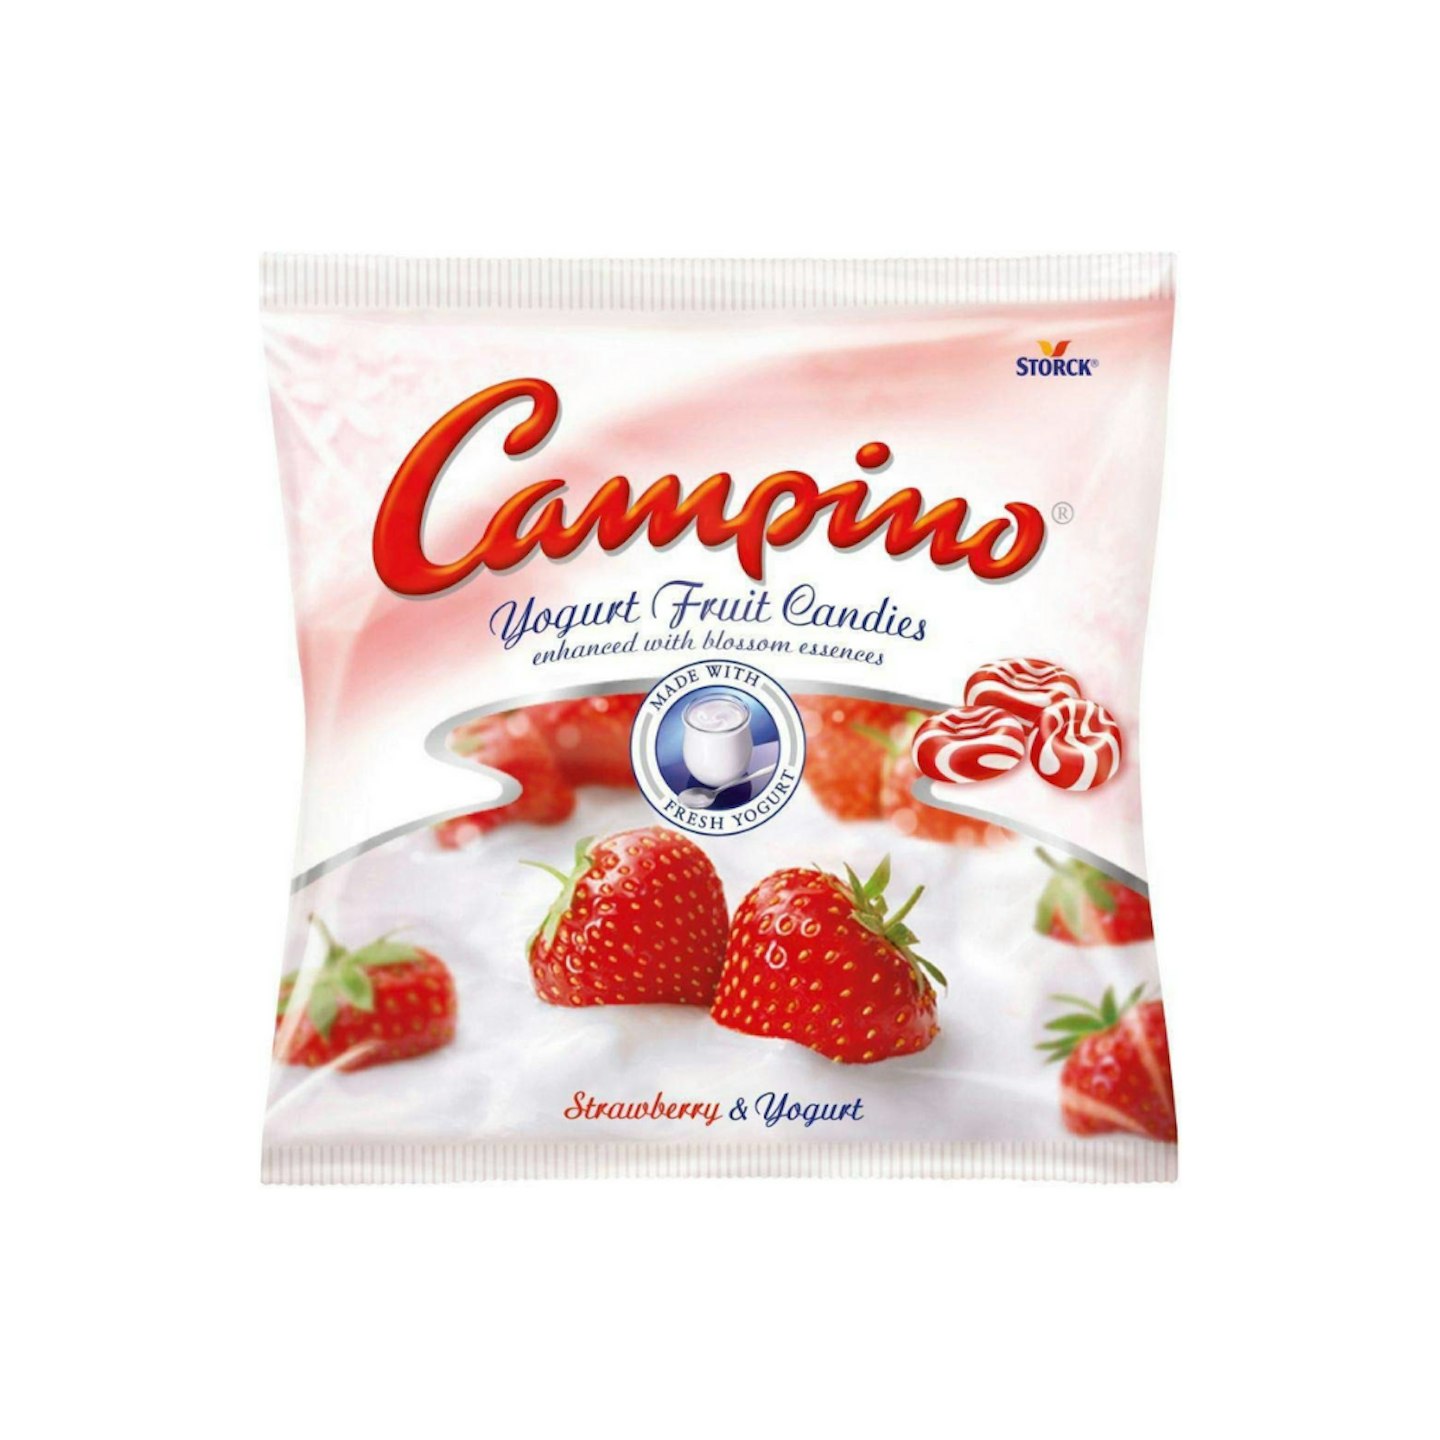 Campino Yoghurt Fruit Candies